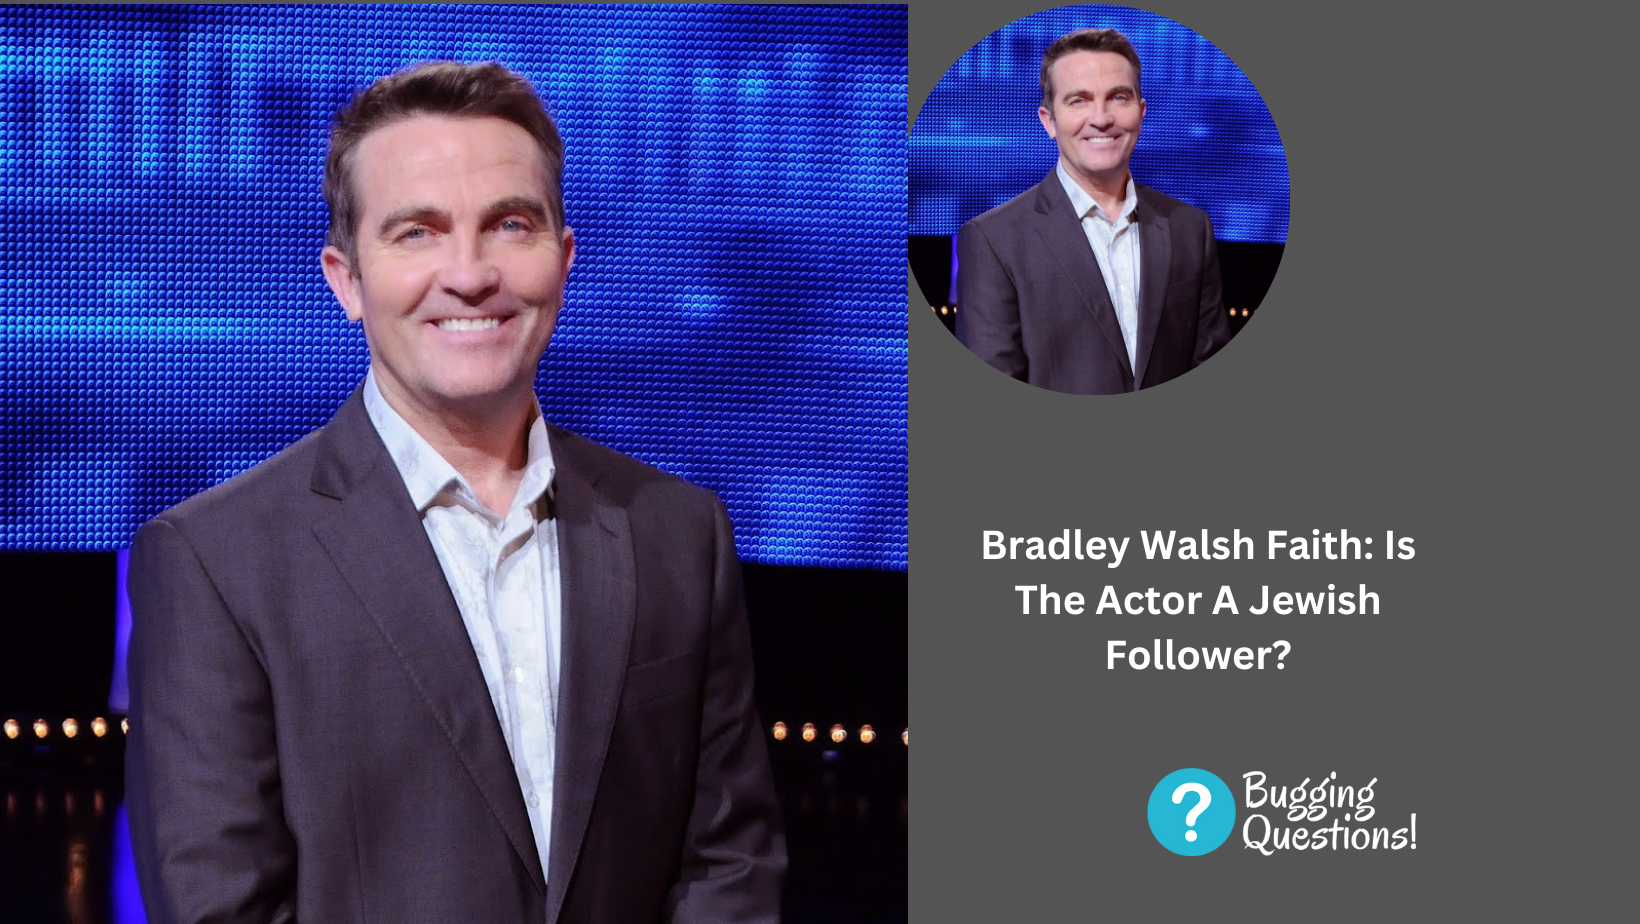 Bradley Walsh Faith: Is The Actor A Jewish Follower?